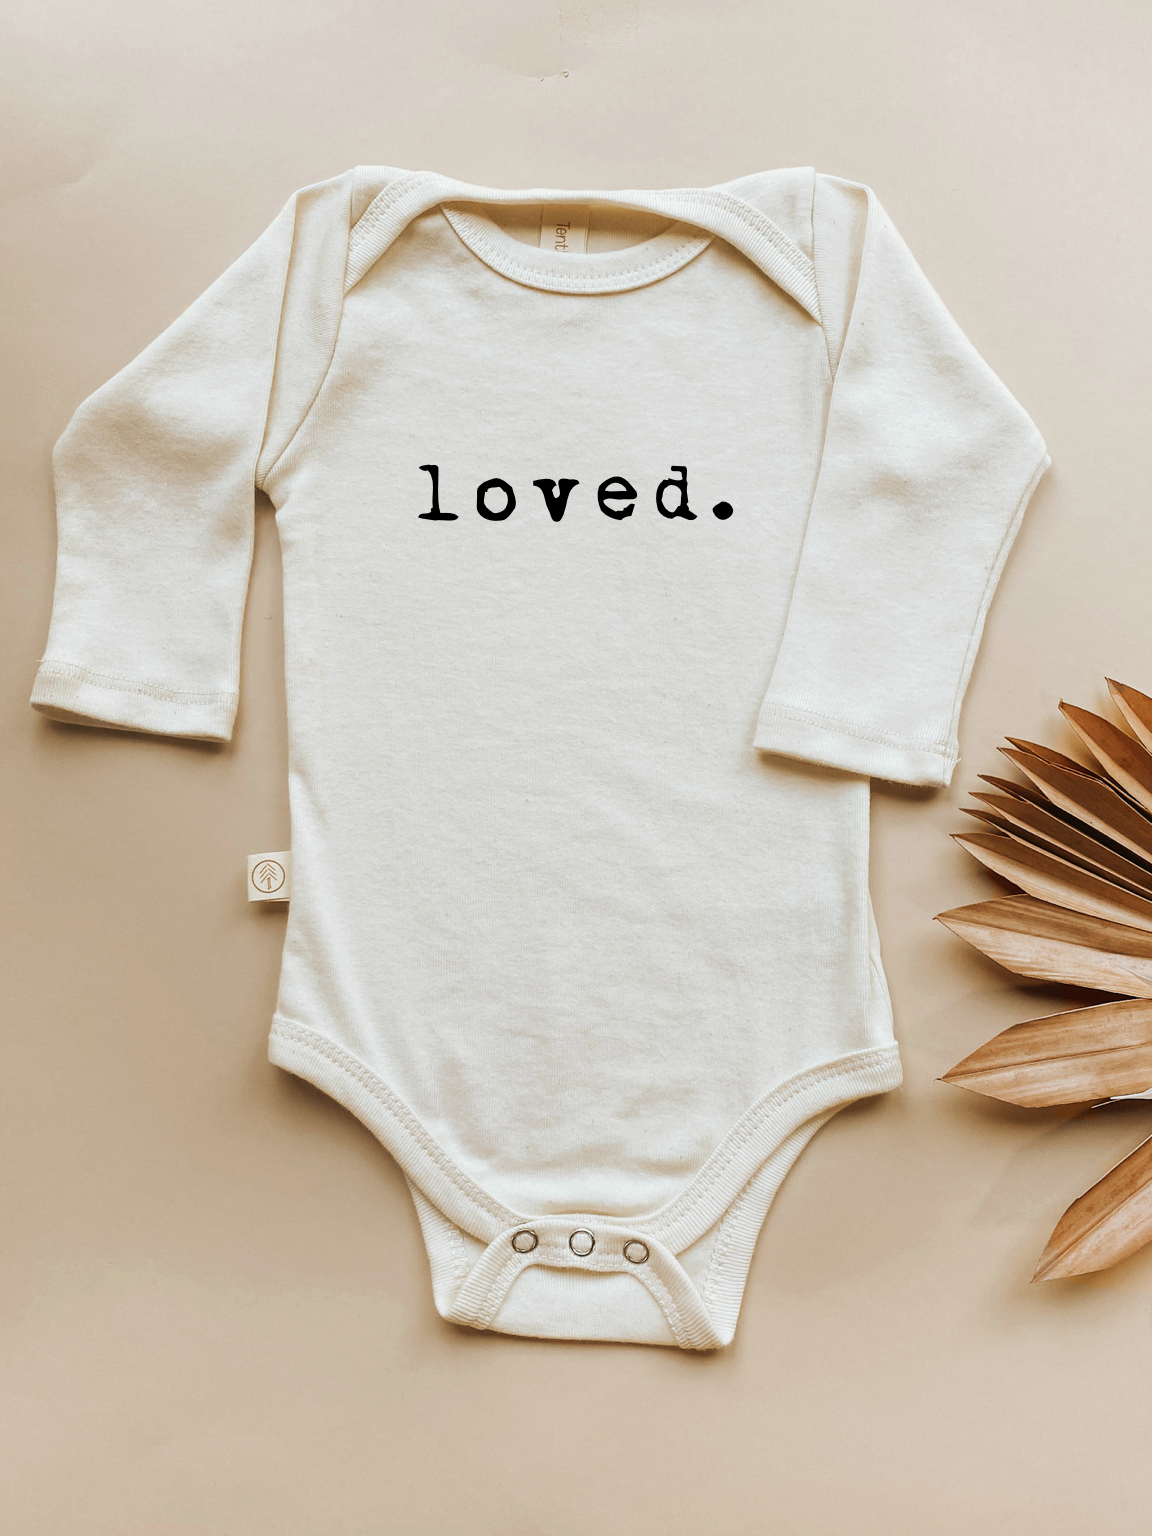 Loved. - Long Sleeve Organic Baby Bodysuit